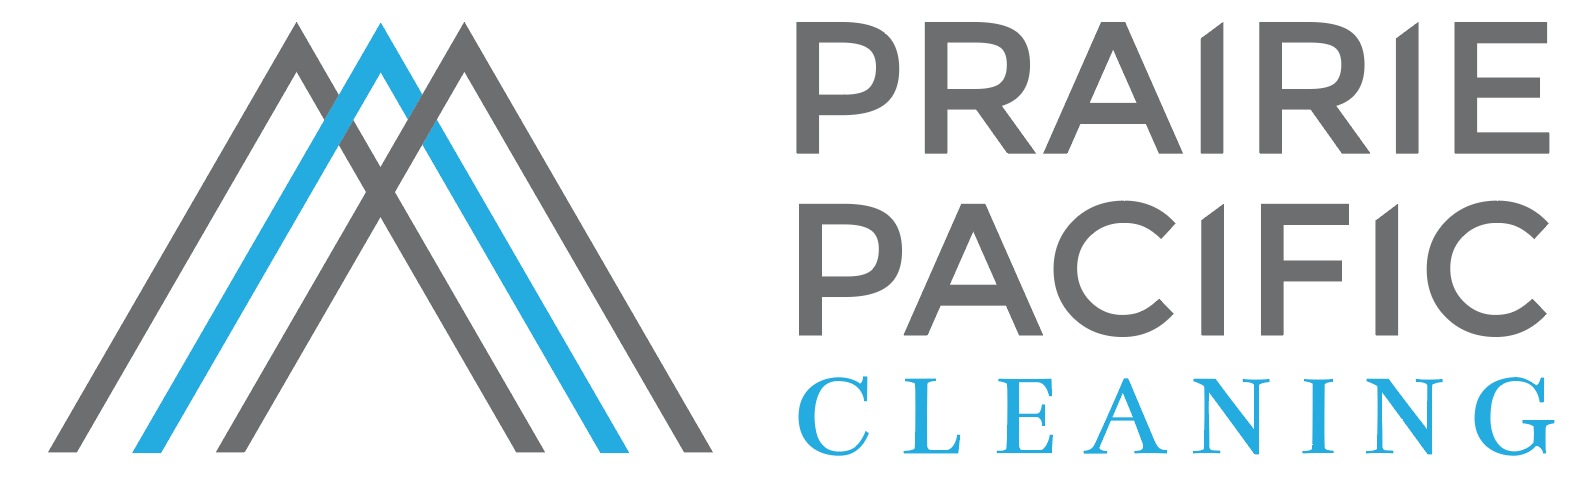 Prairie Pacific Cleaning - Saskatoon, SK - Commercial Cleaning, Industrial Cleaning, Office Cleaning